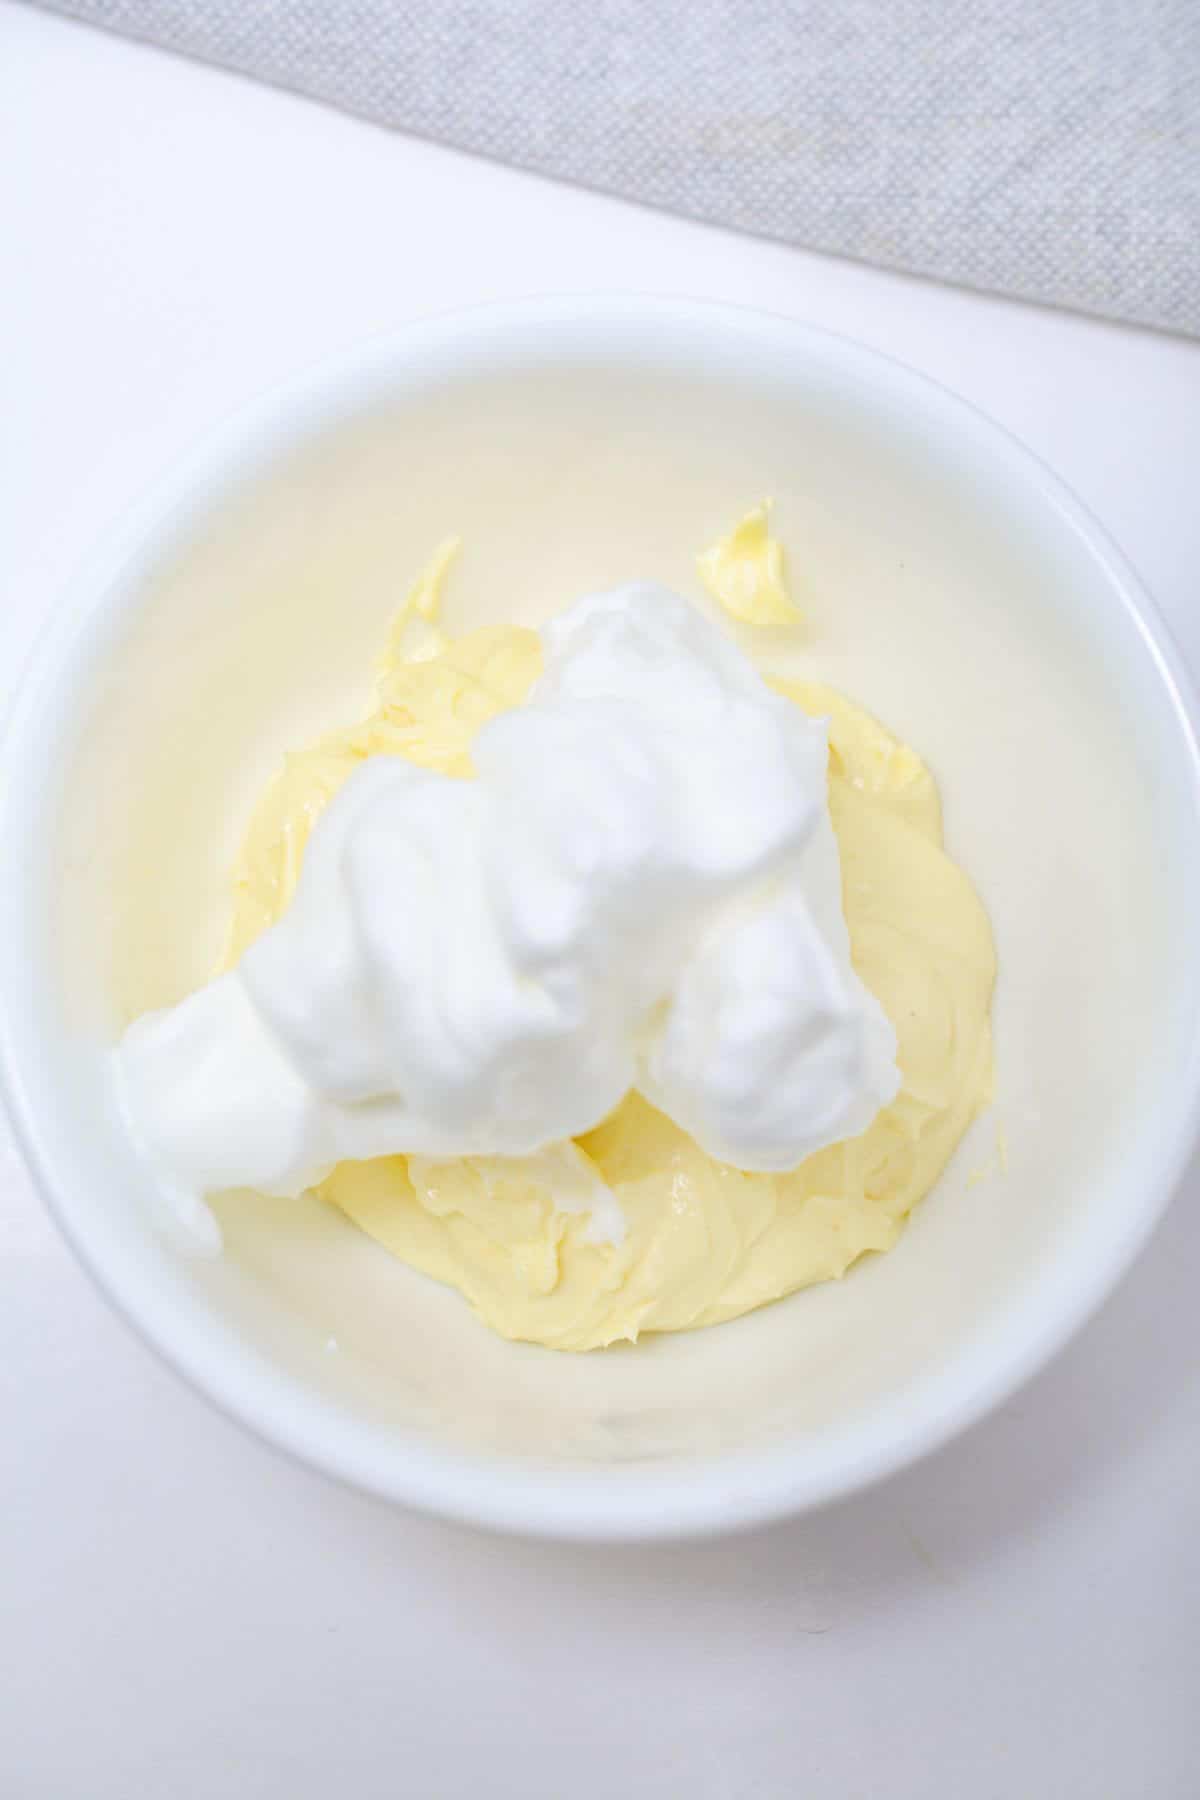 Added egg white mixture to cream cheese mixture.